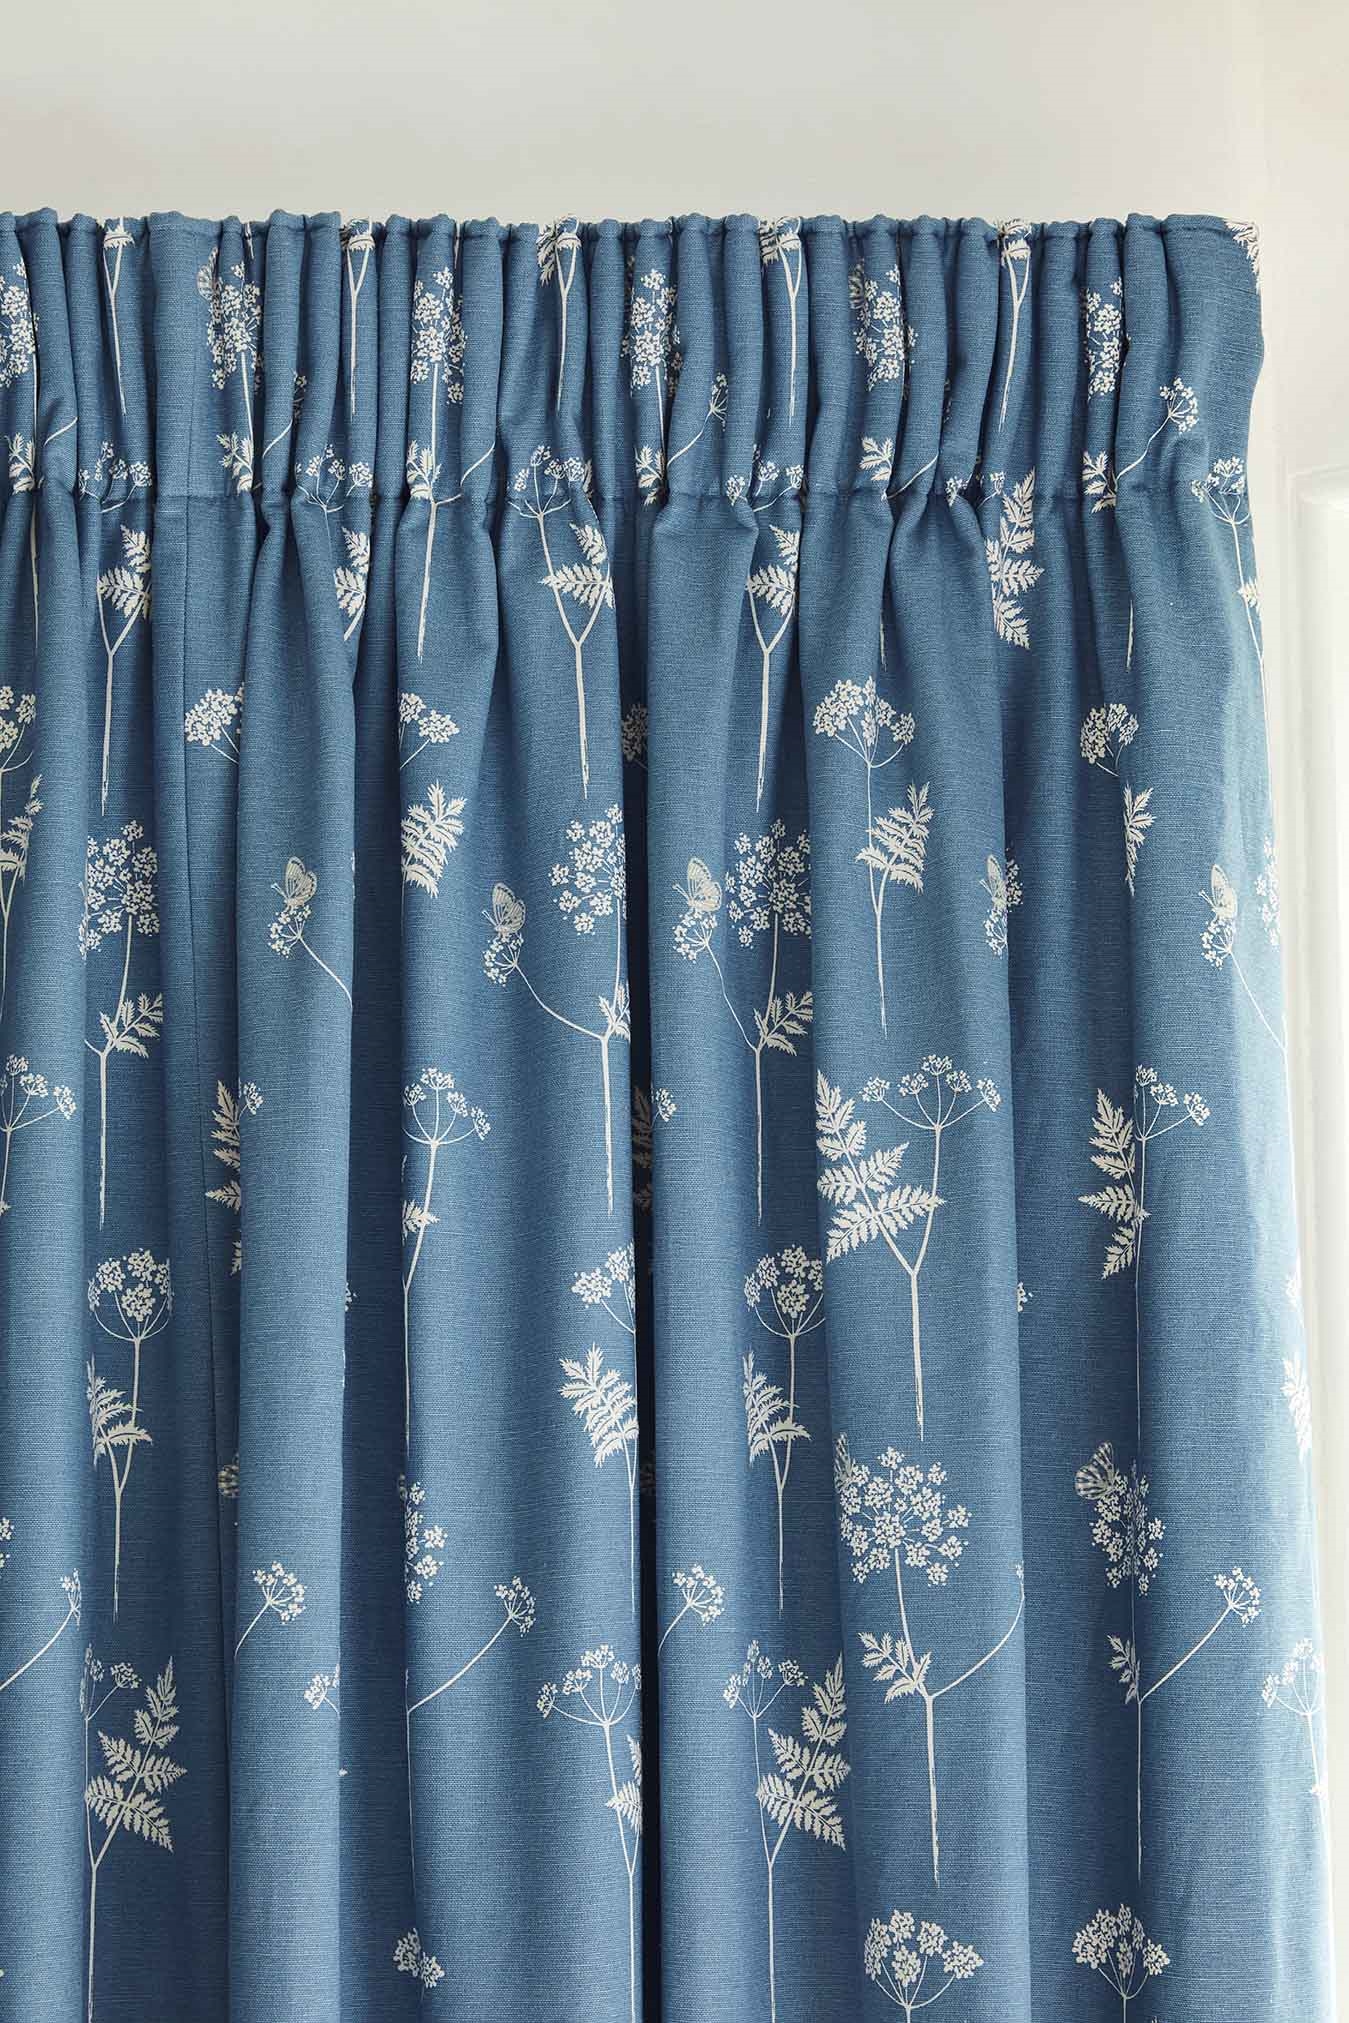 dark blue curtains